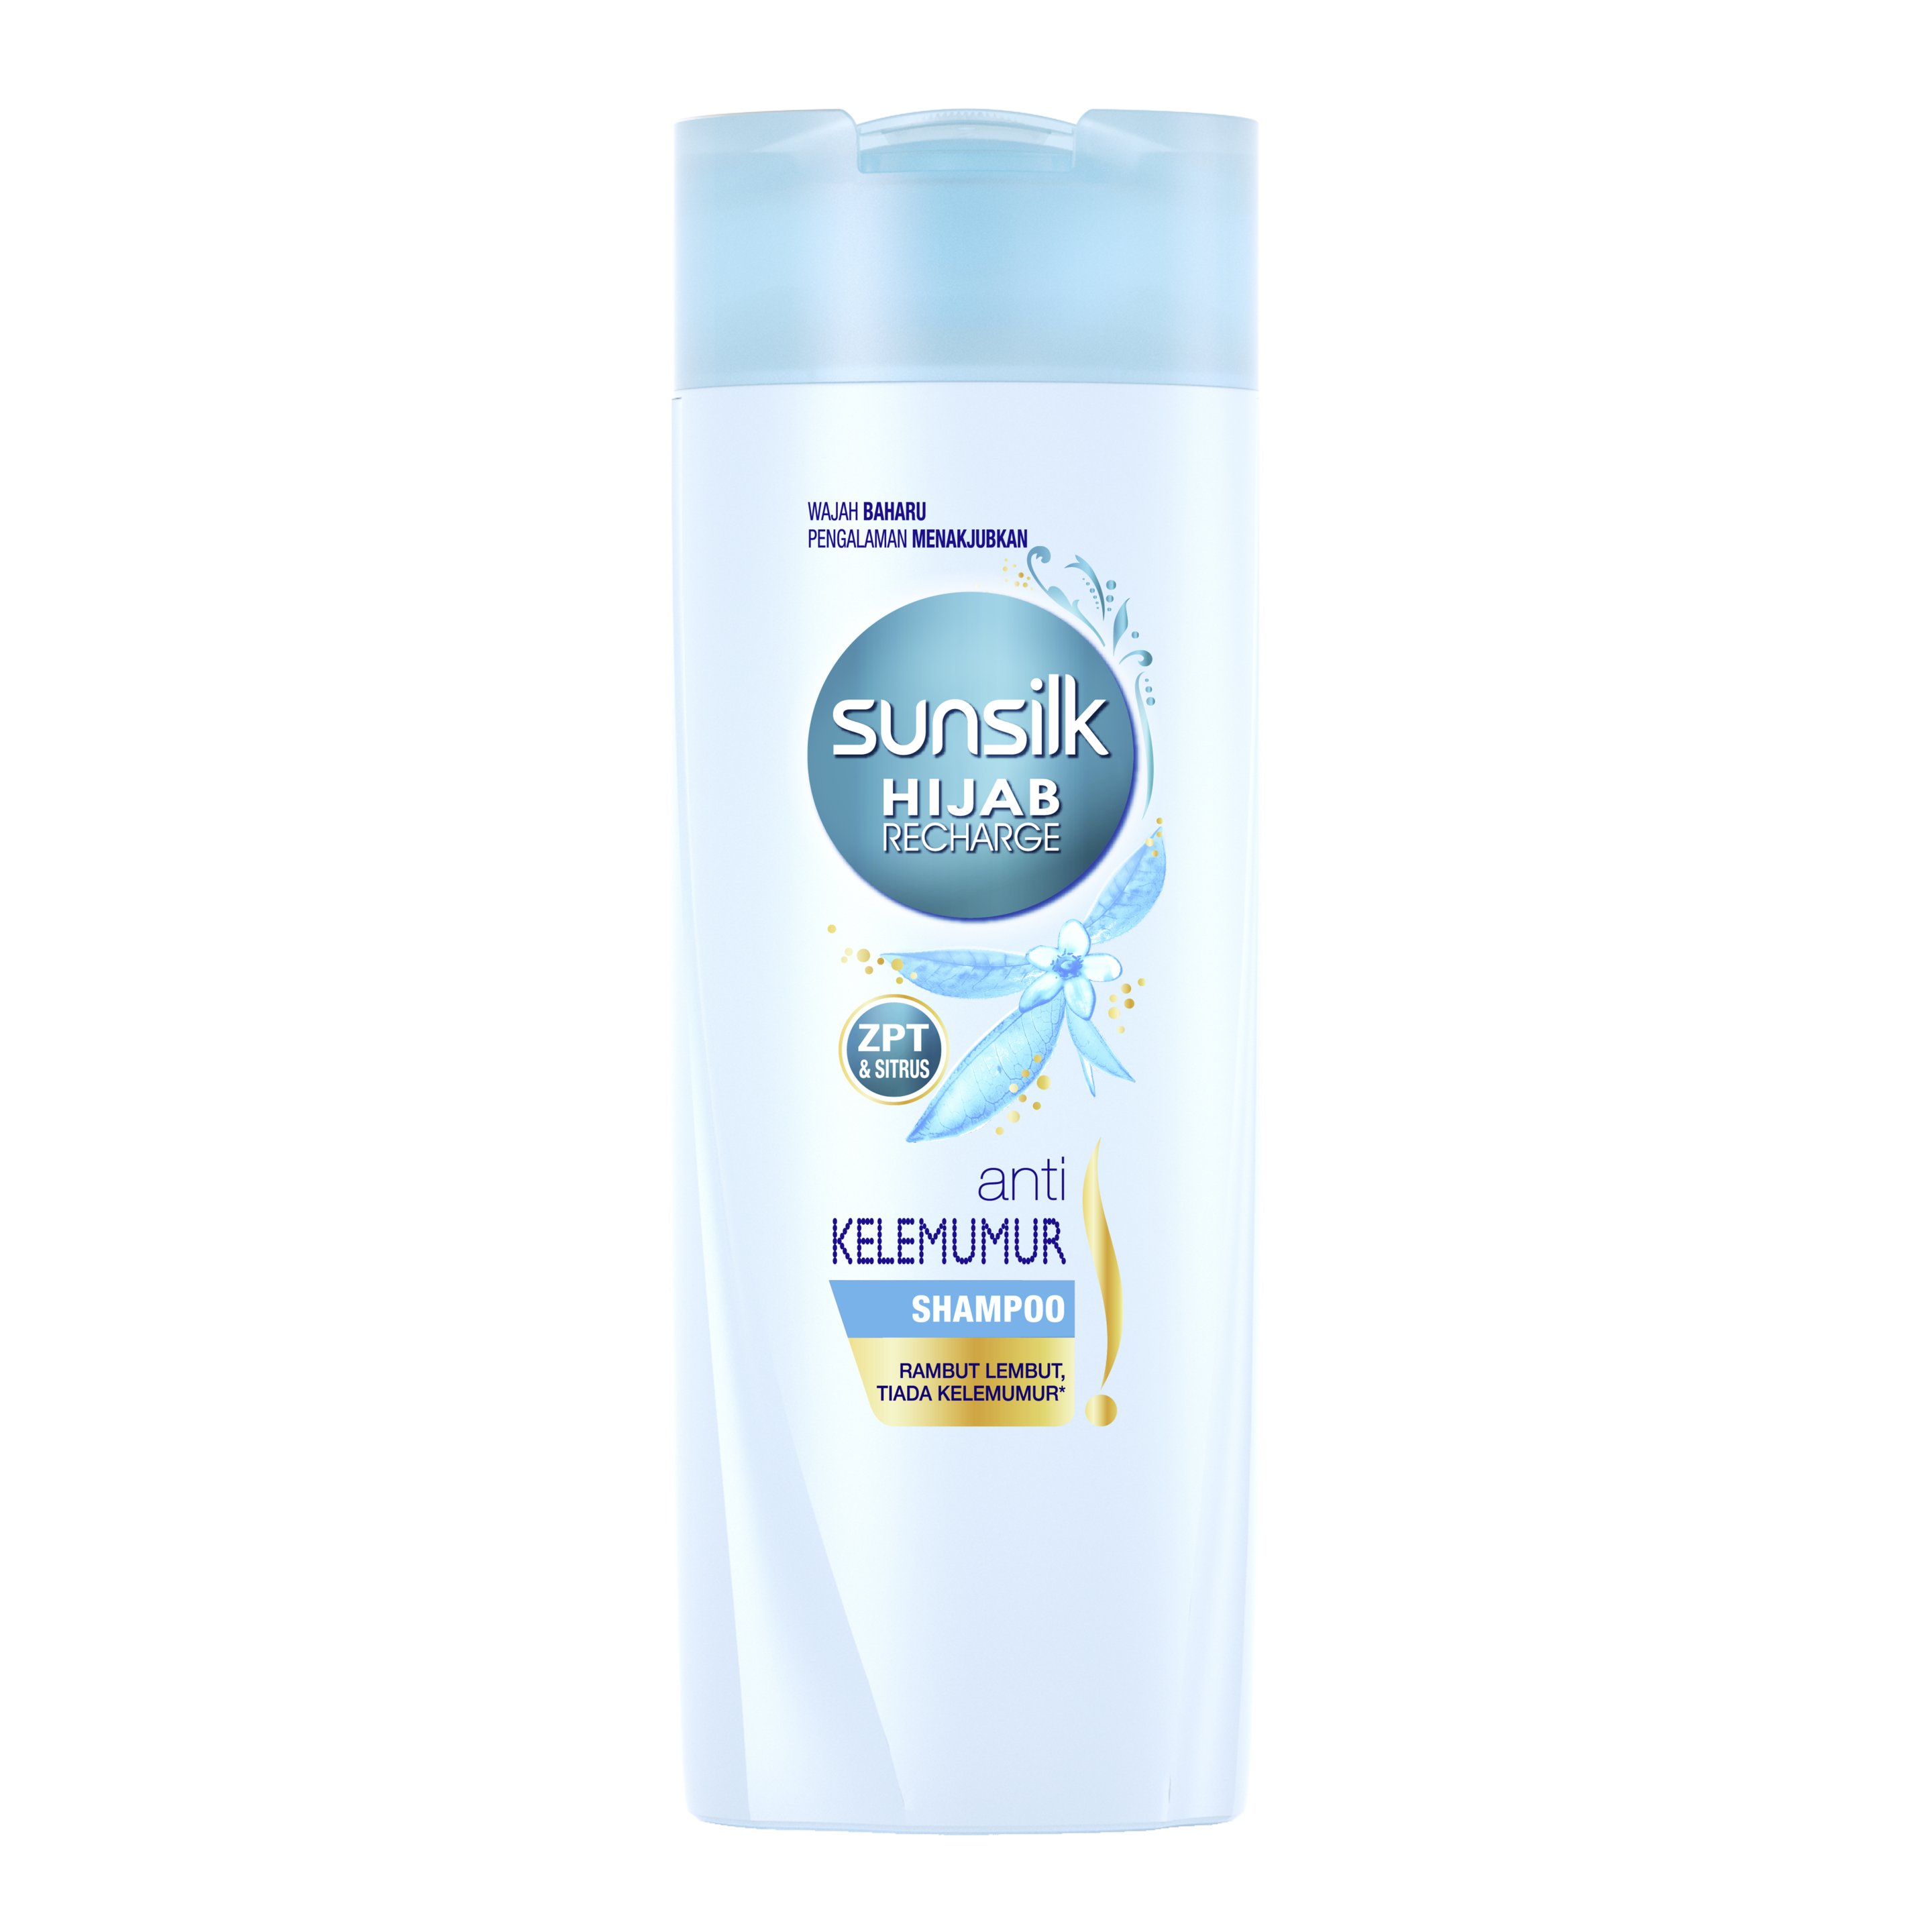 Sunsilk Hijab Recharge Anti Kelemumur Shampoo 70ml front of pack image